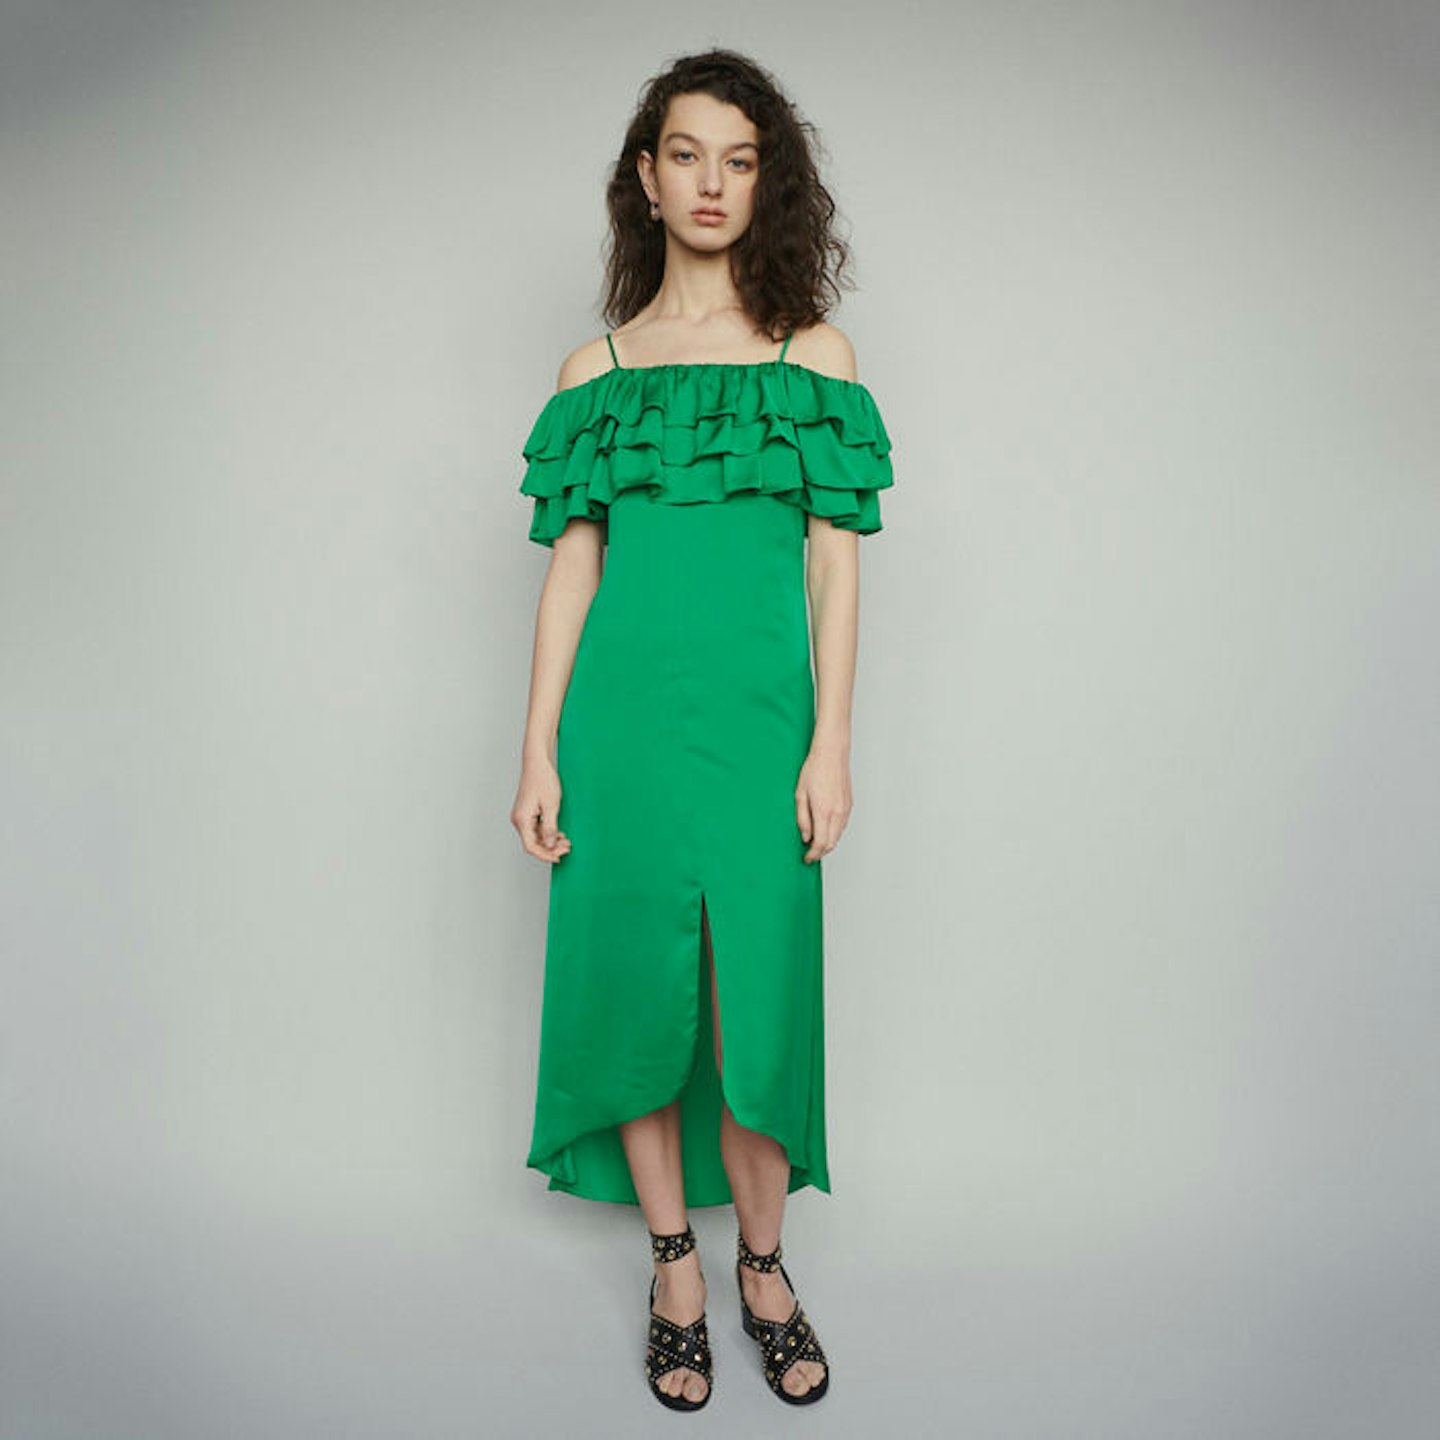 Green Ruffle Midi Dress, £269